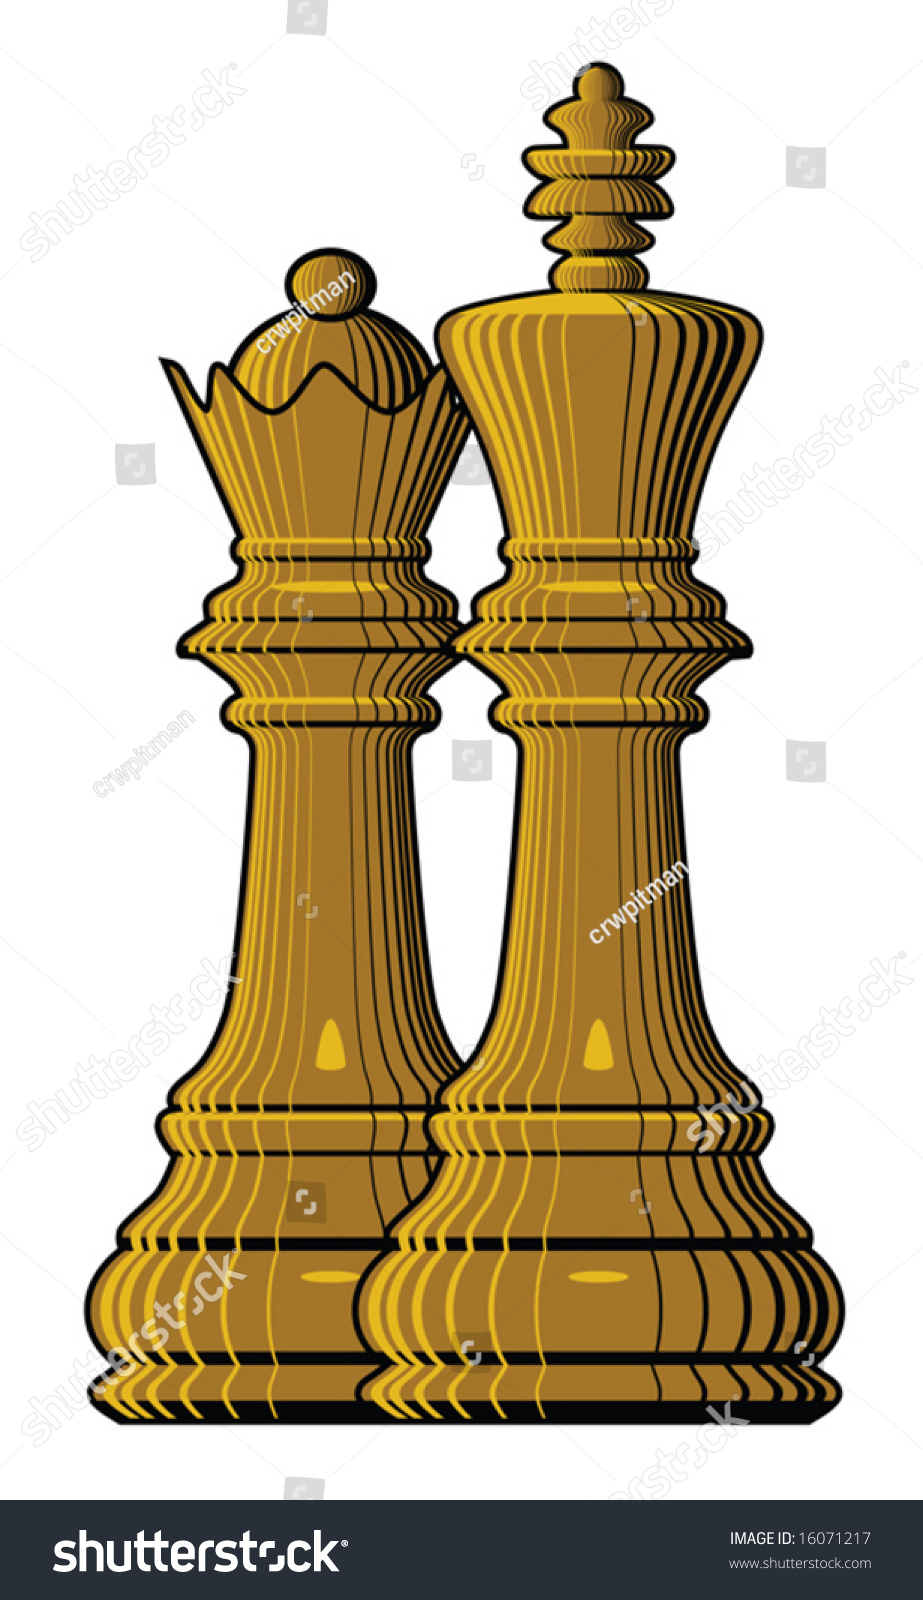 clip art chess queen - photo #28